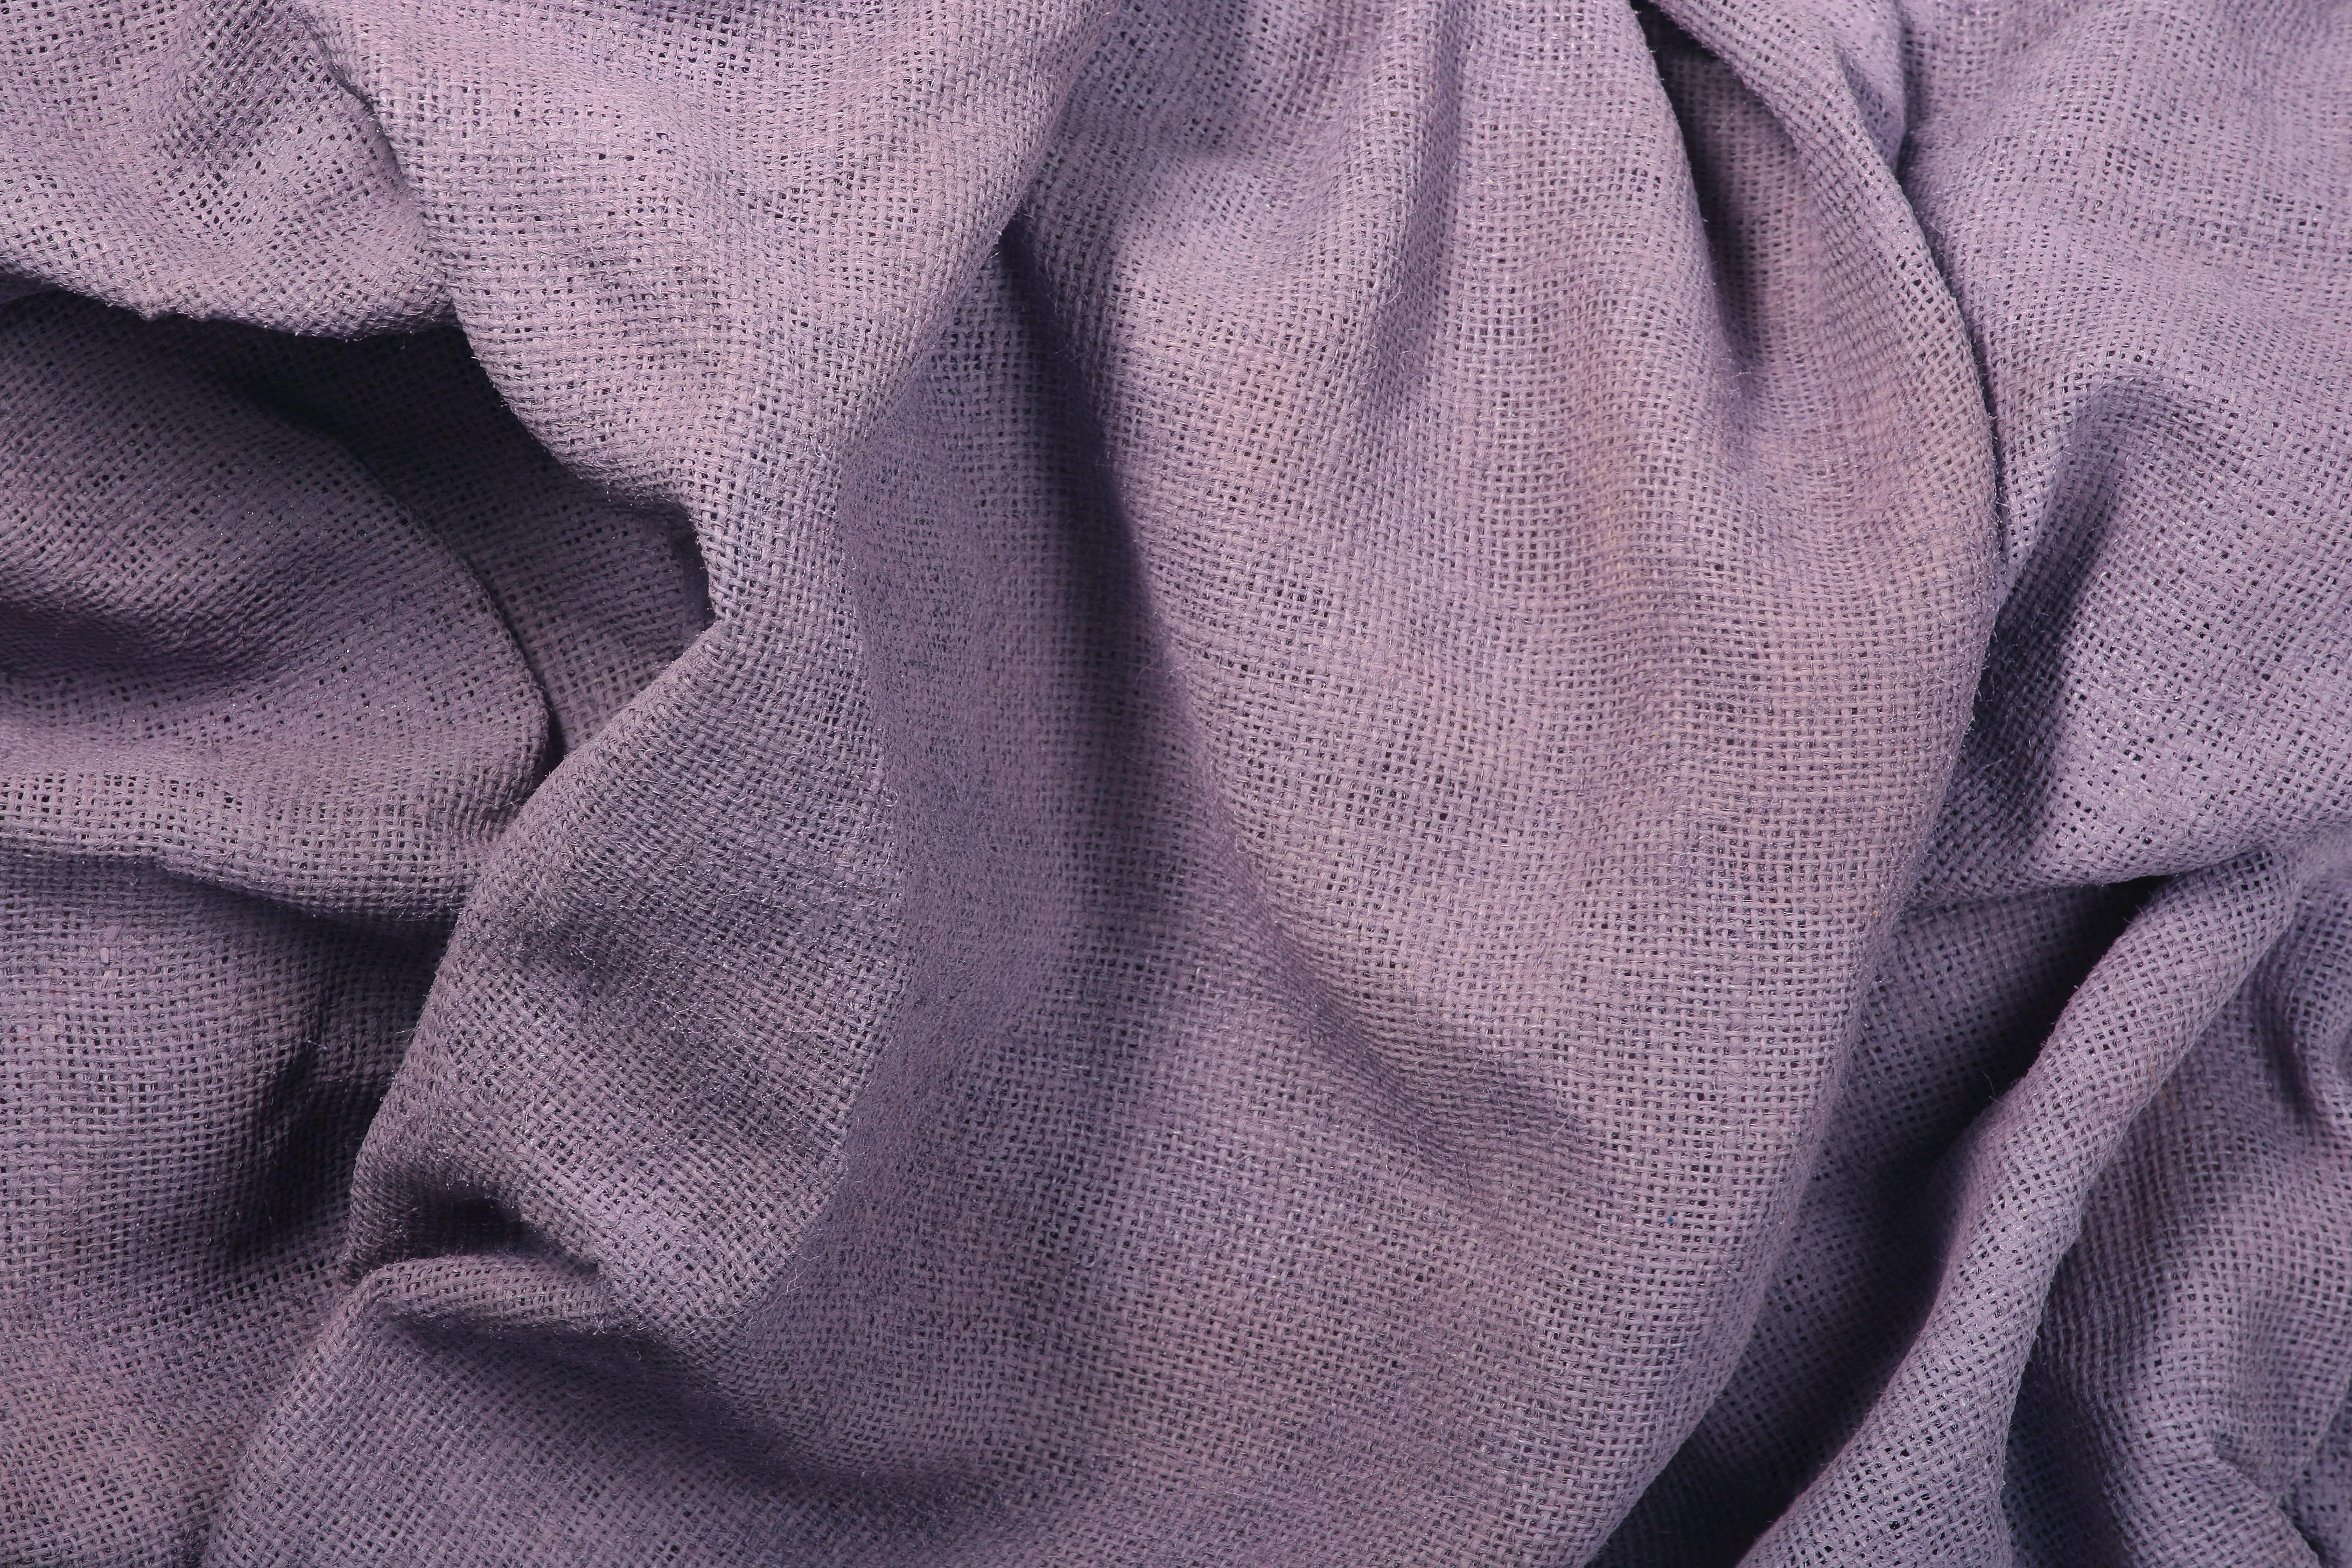 Lavender Folds 2 (fabric art, wall sculpture, contemporary design, textile art) - Sculpture by Chloe Hedden